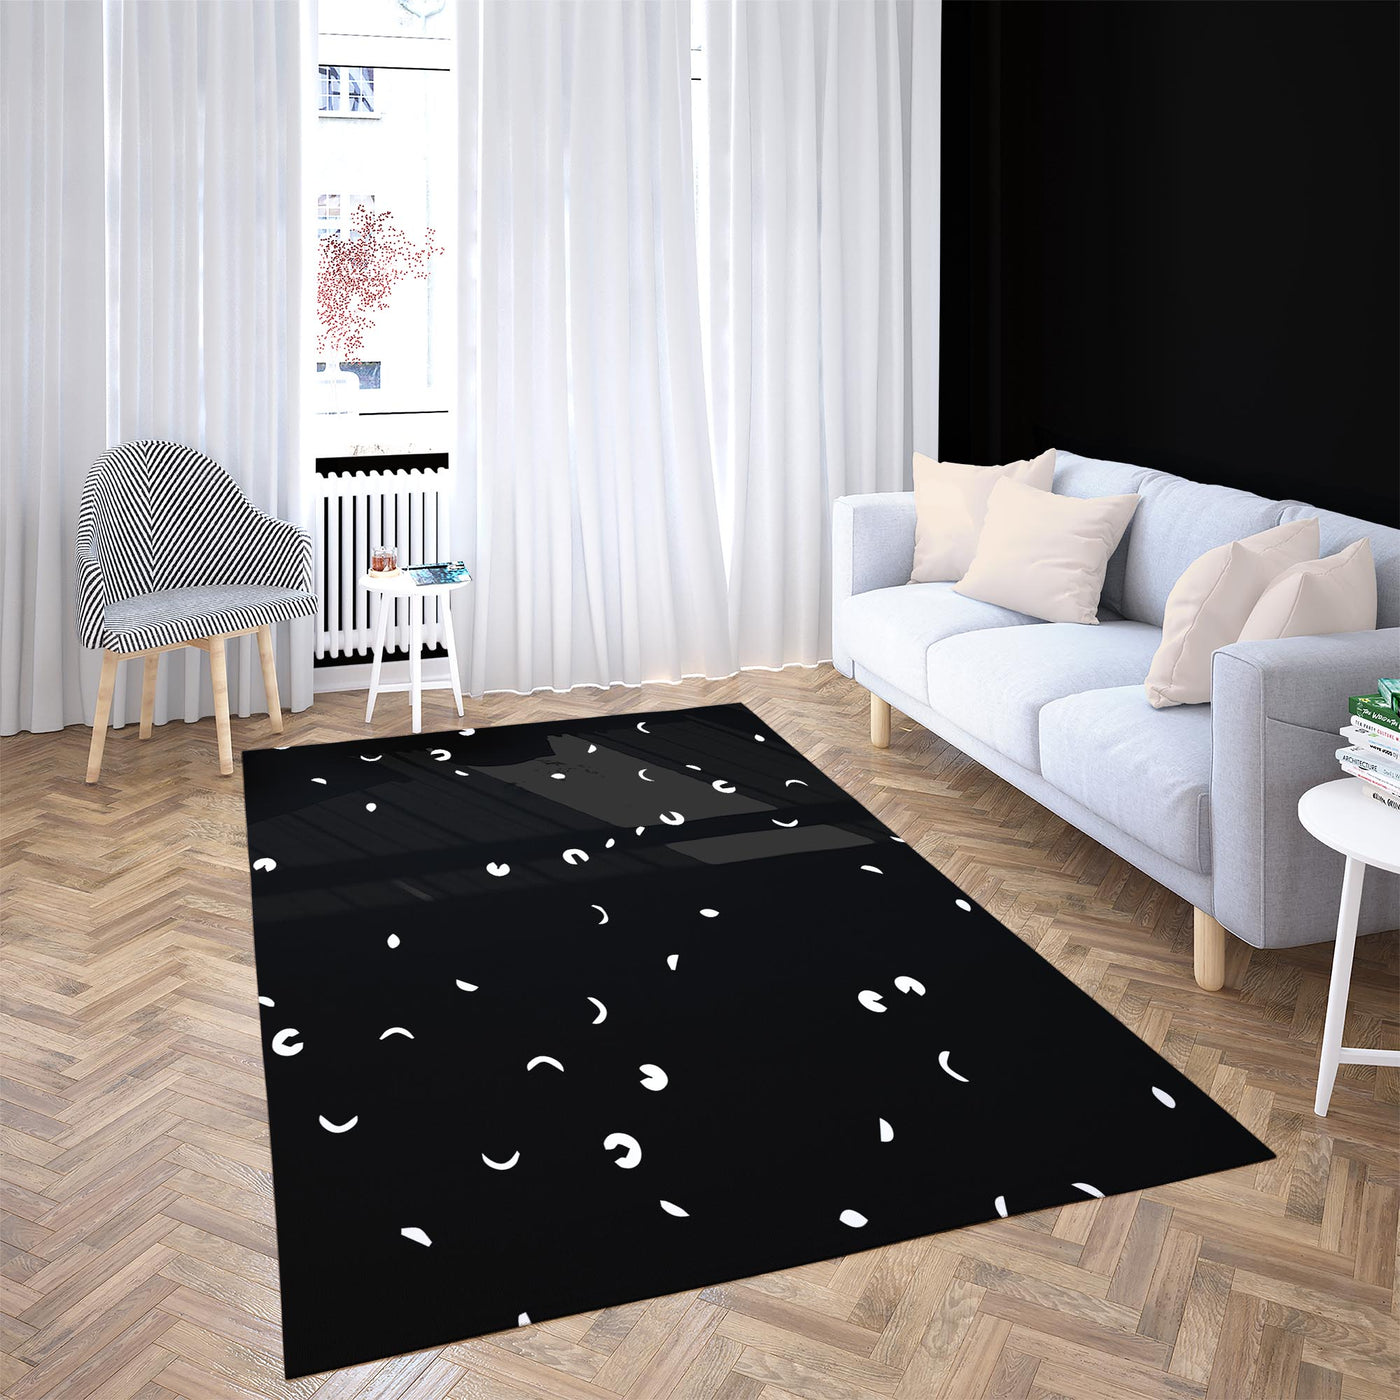 Hollow Star Carpet